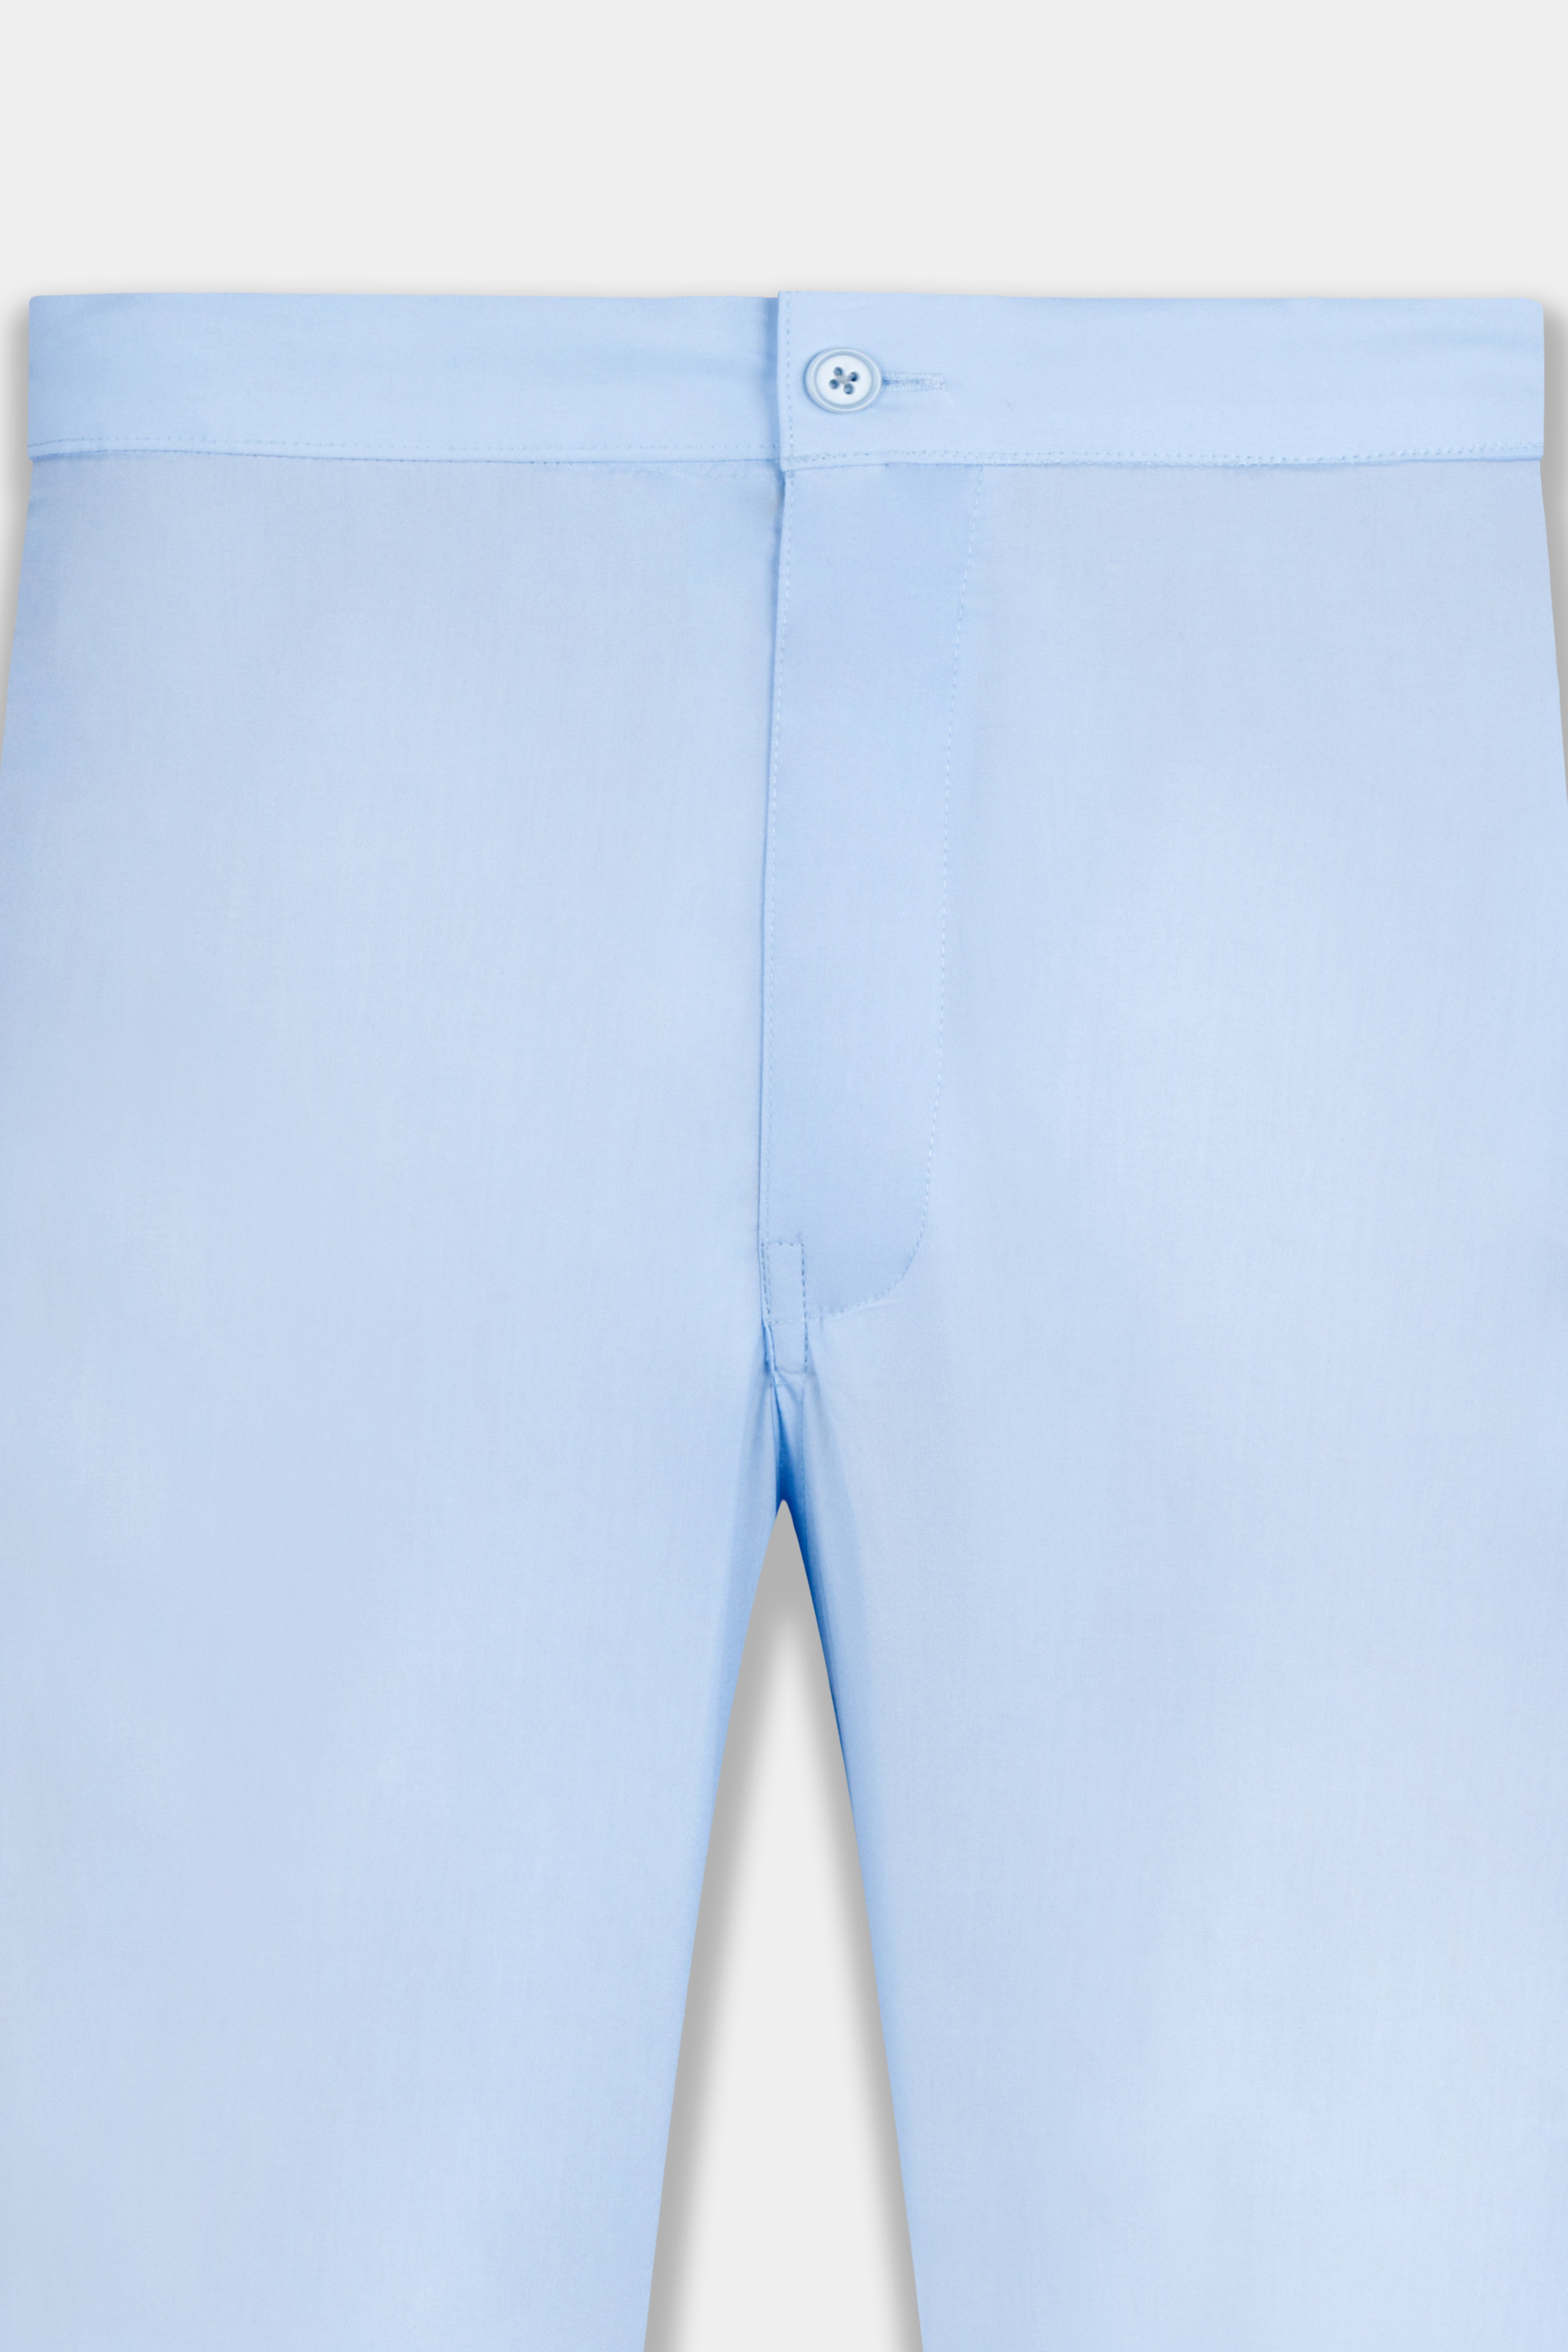 Tropical Blue super Soft Premium Oxford Lounge Pant